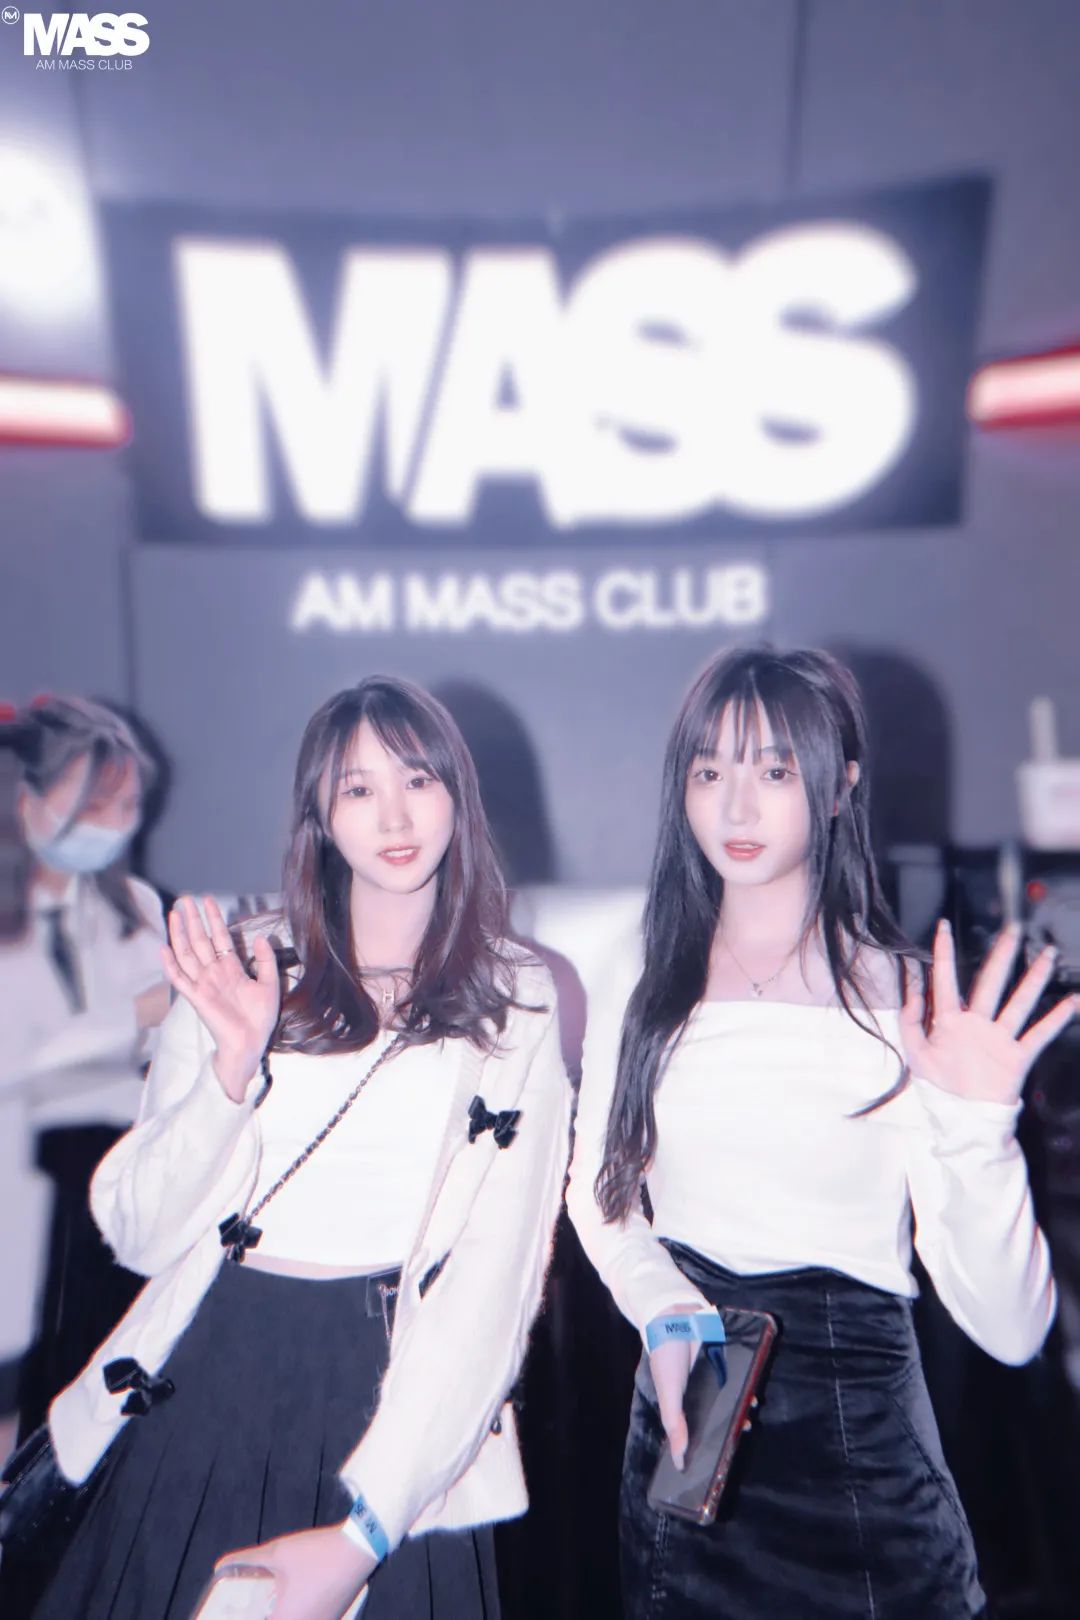 AM MASS CULB周六派对 I 感受辣妹组合的轰炸之夜-广州MASS酒吧/AM MASS CLUB